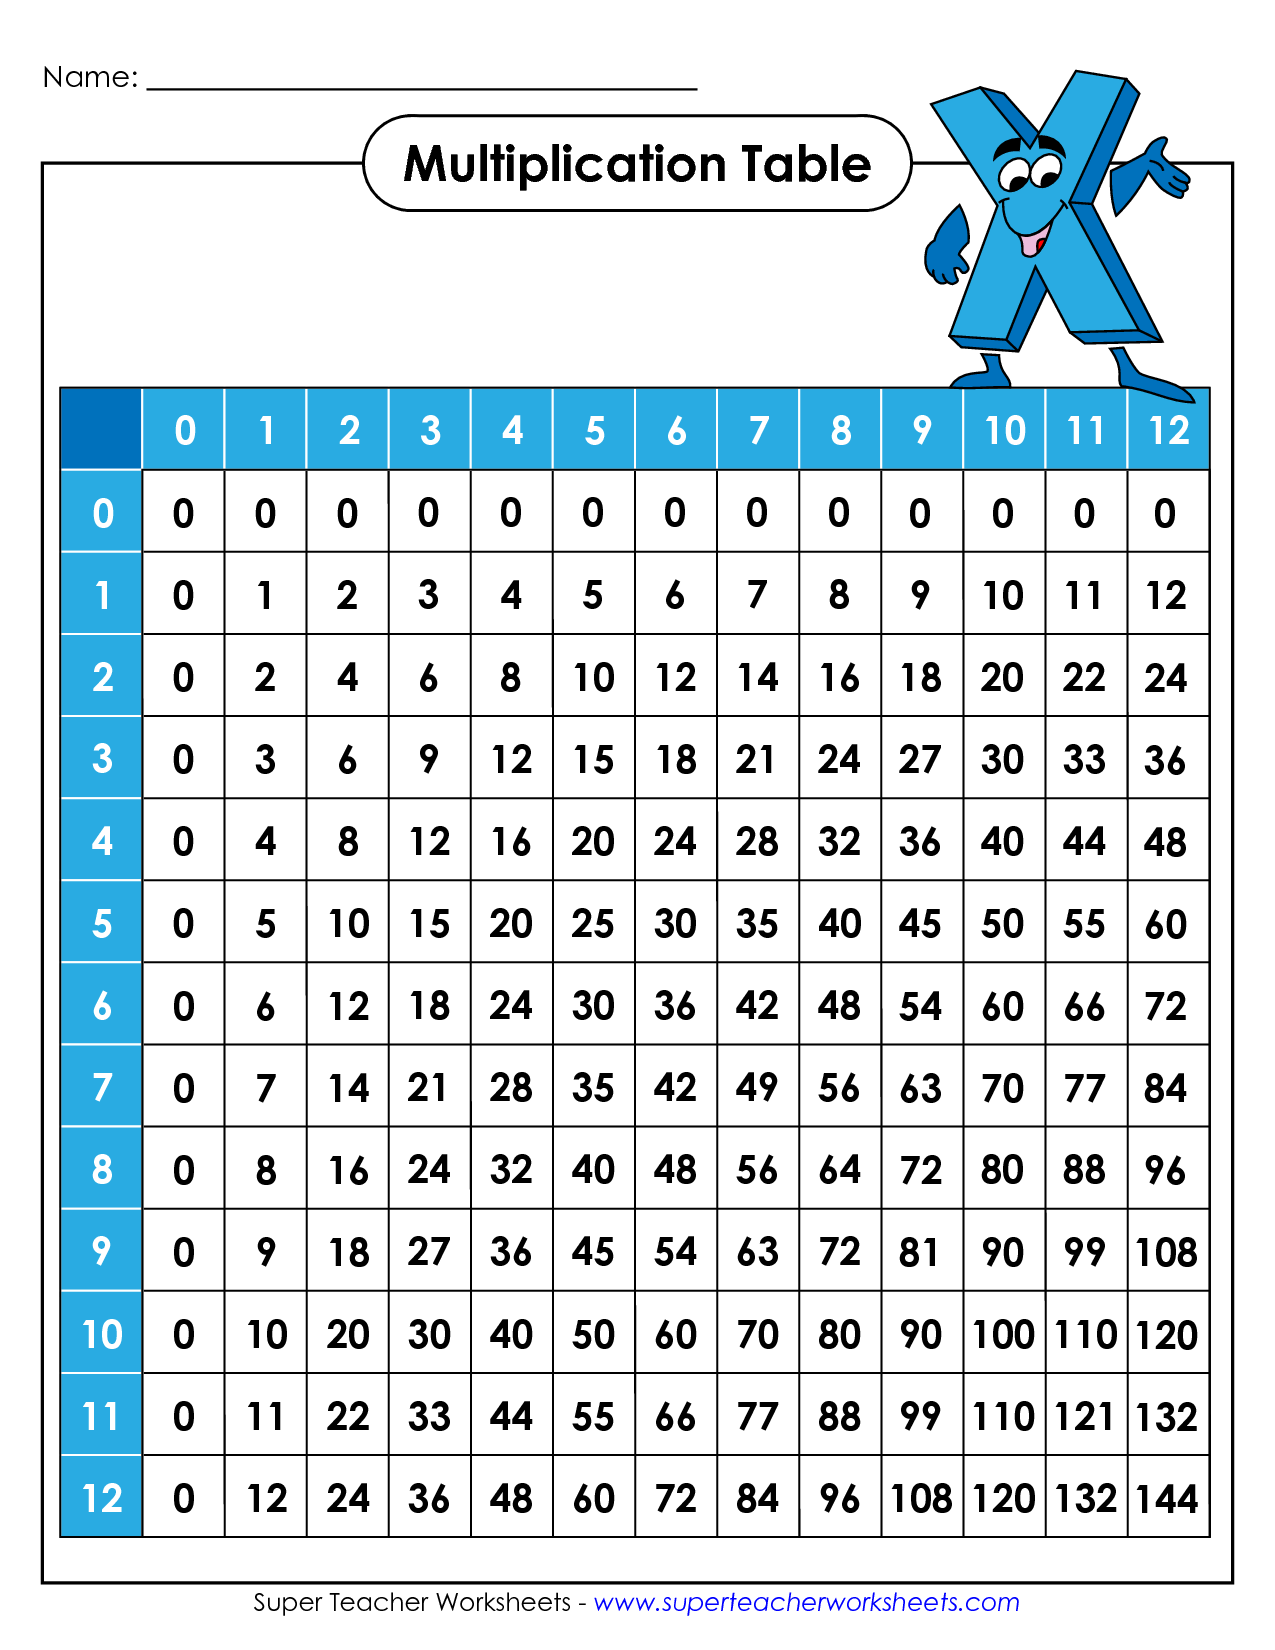 Free Printable Multiplication Chart 012